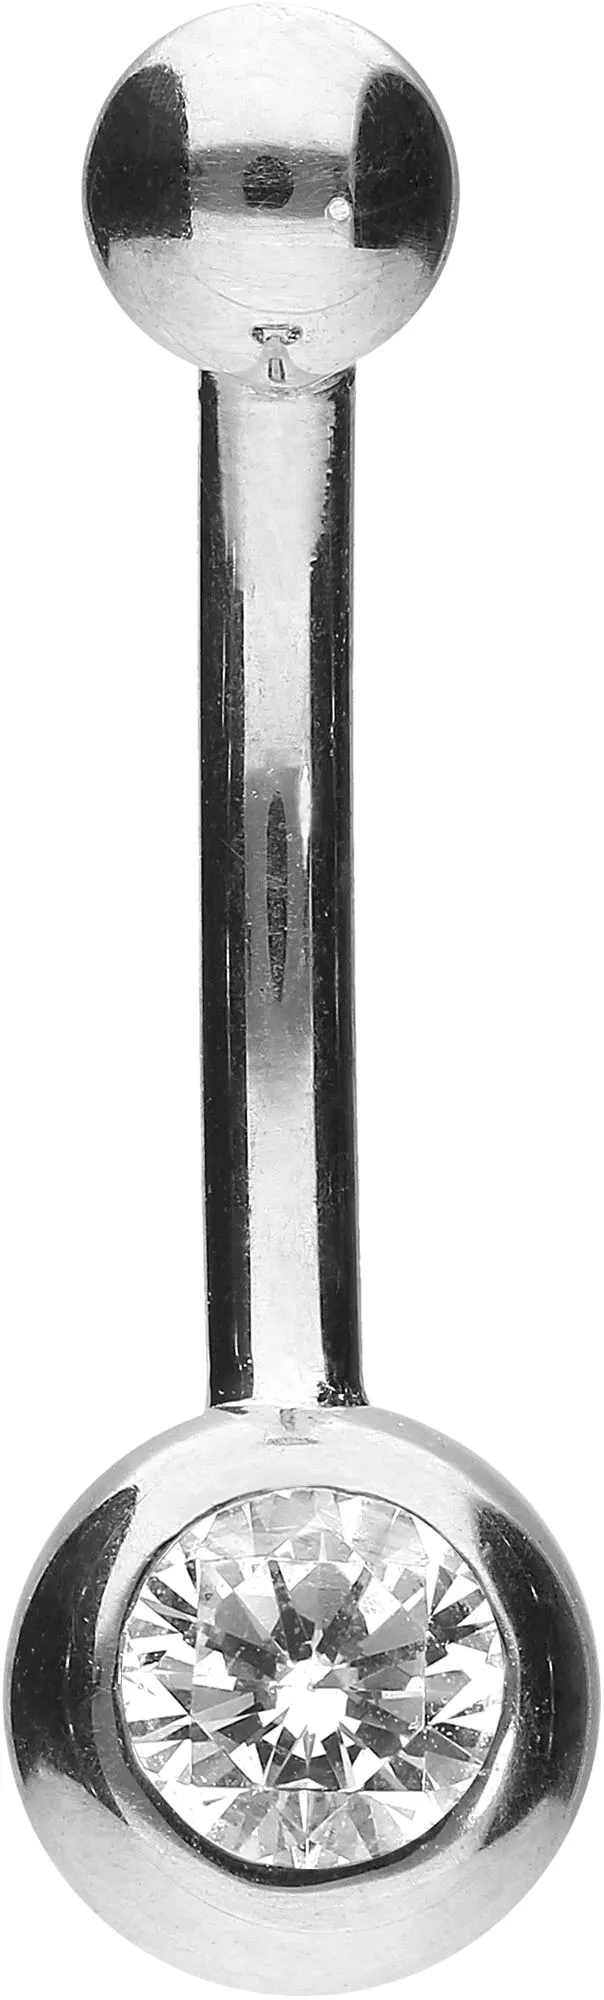 Bauchnabelpiercing 18karat Echtgold Weissgold mit 6mm-Kristallkugel